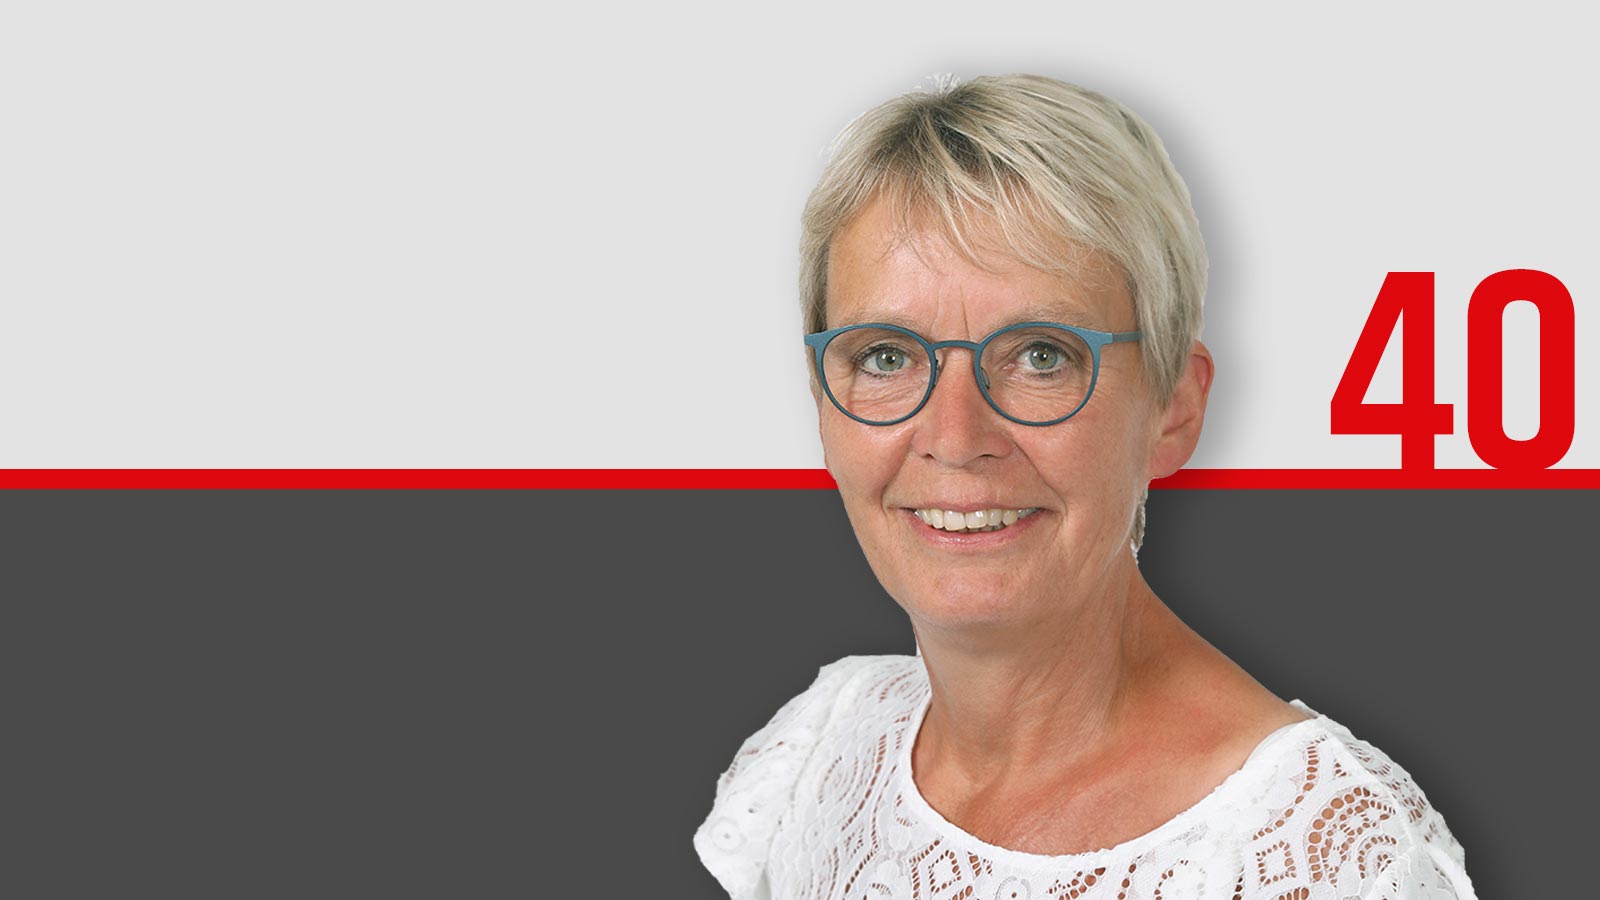 Lene Jørgensen har 40 års jubilæum